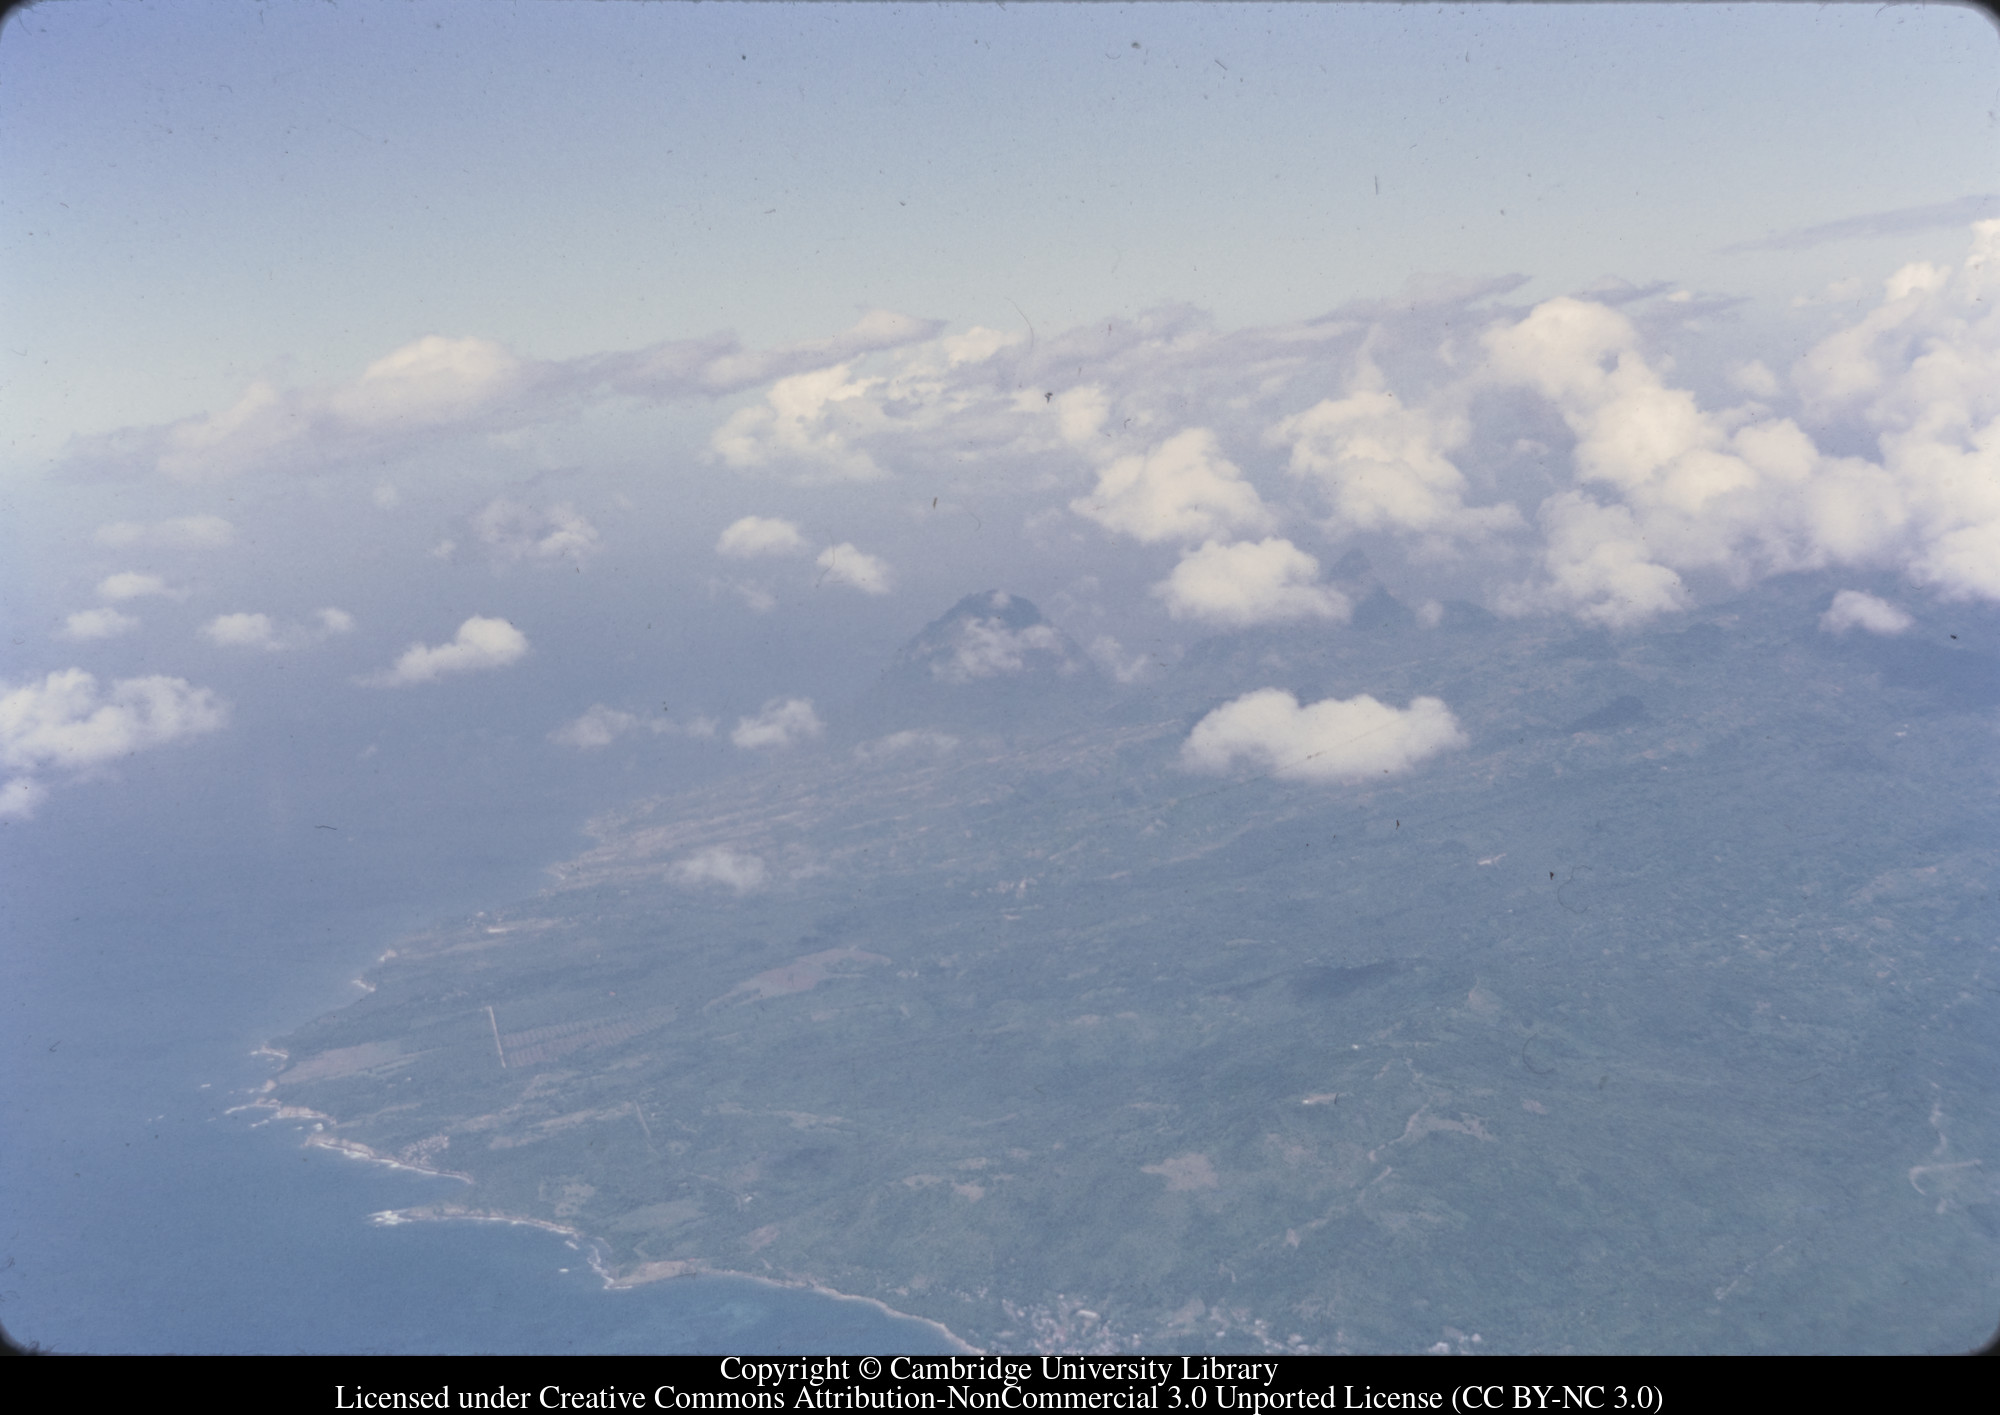 SW [i.e. south-west] coast from air including Gros Pitons, 1971-02